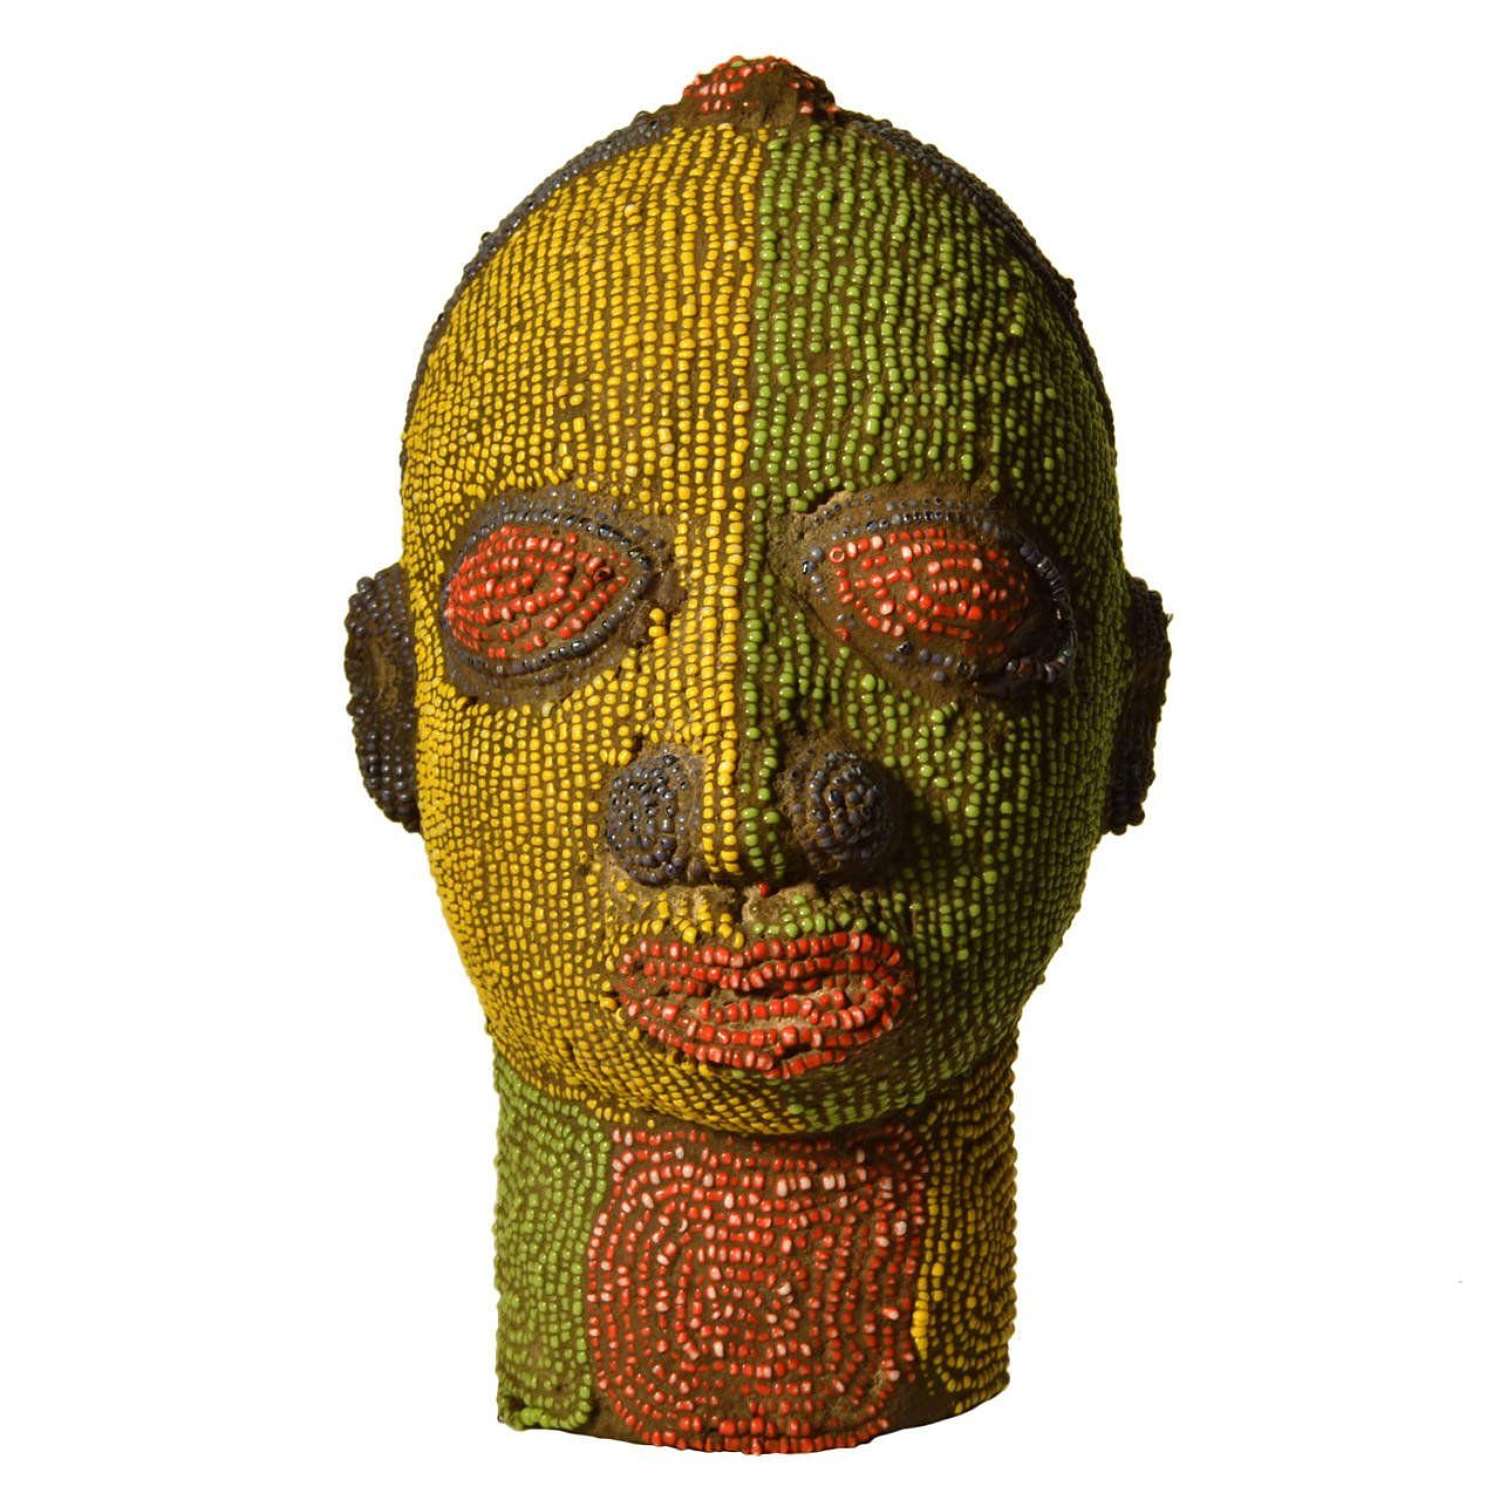 Nigerian Female Head Sculpture in Colored Beads